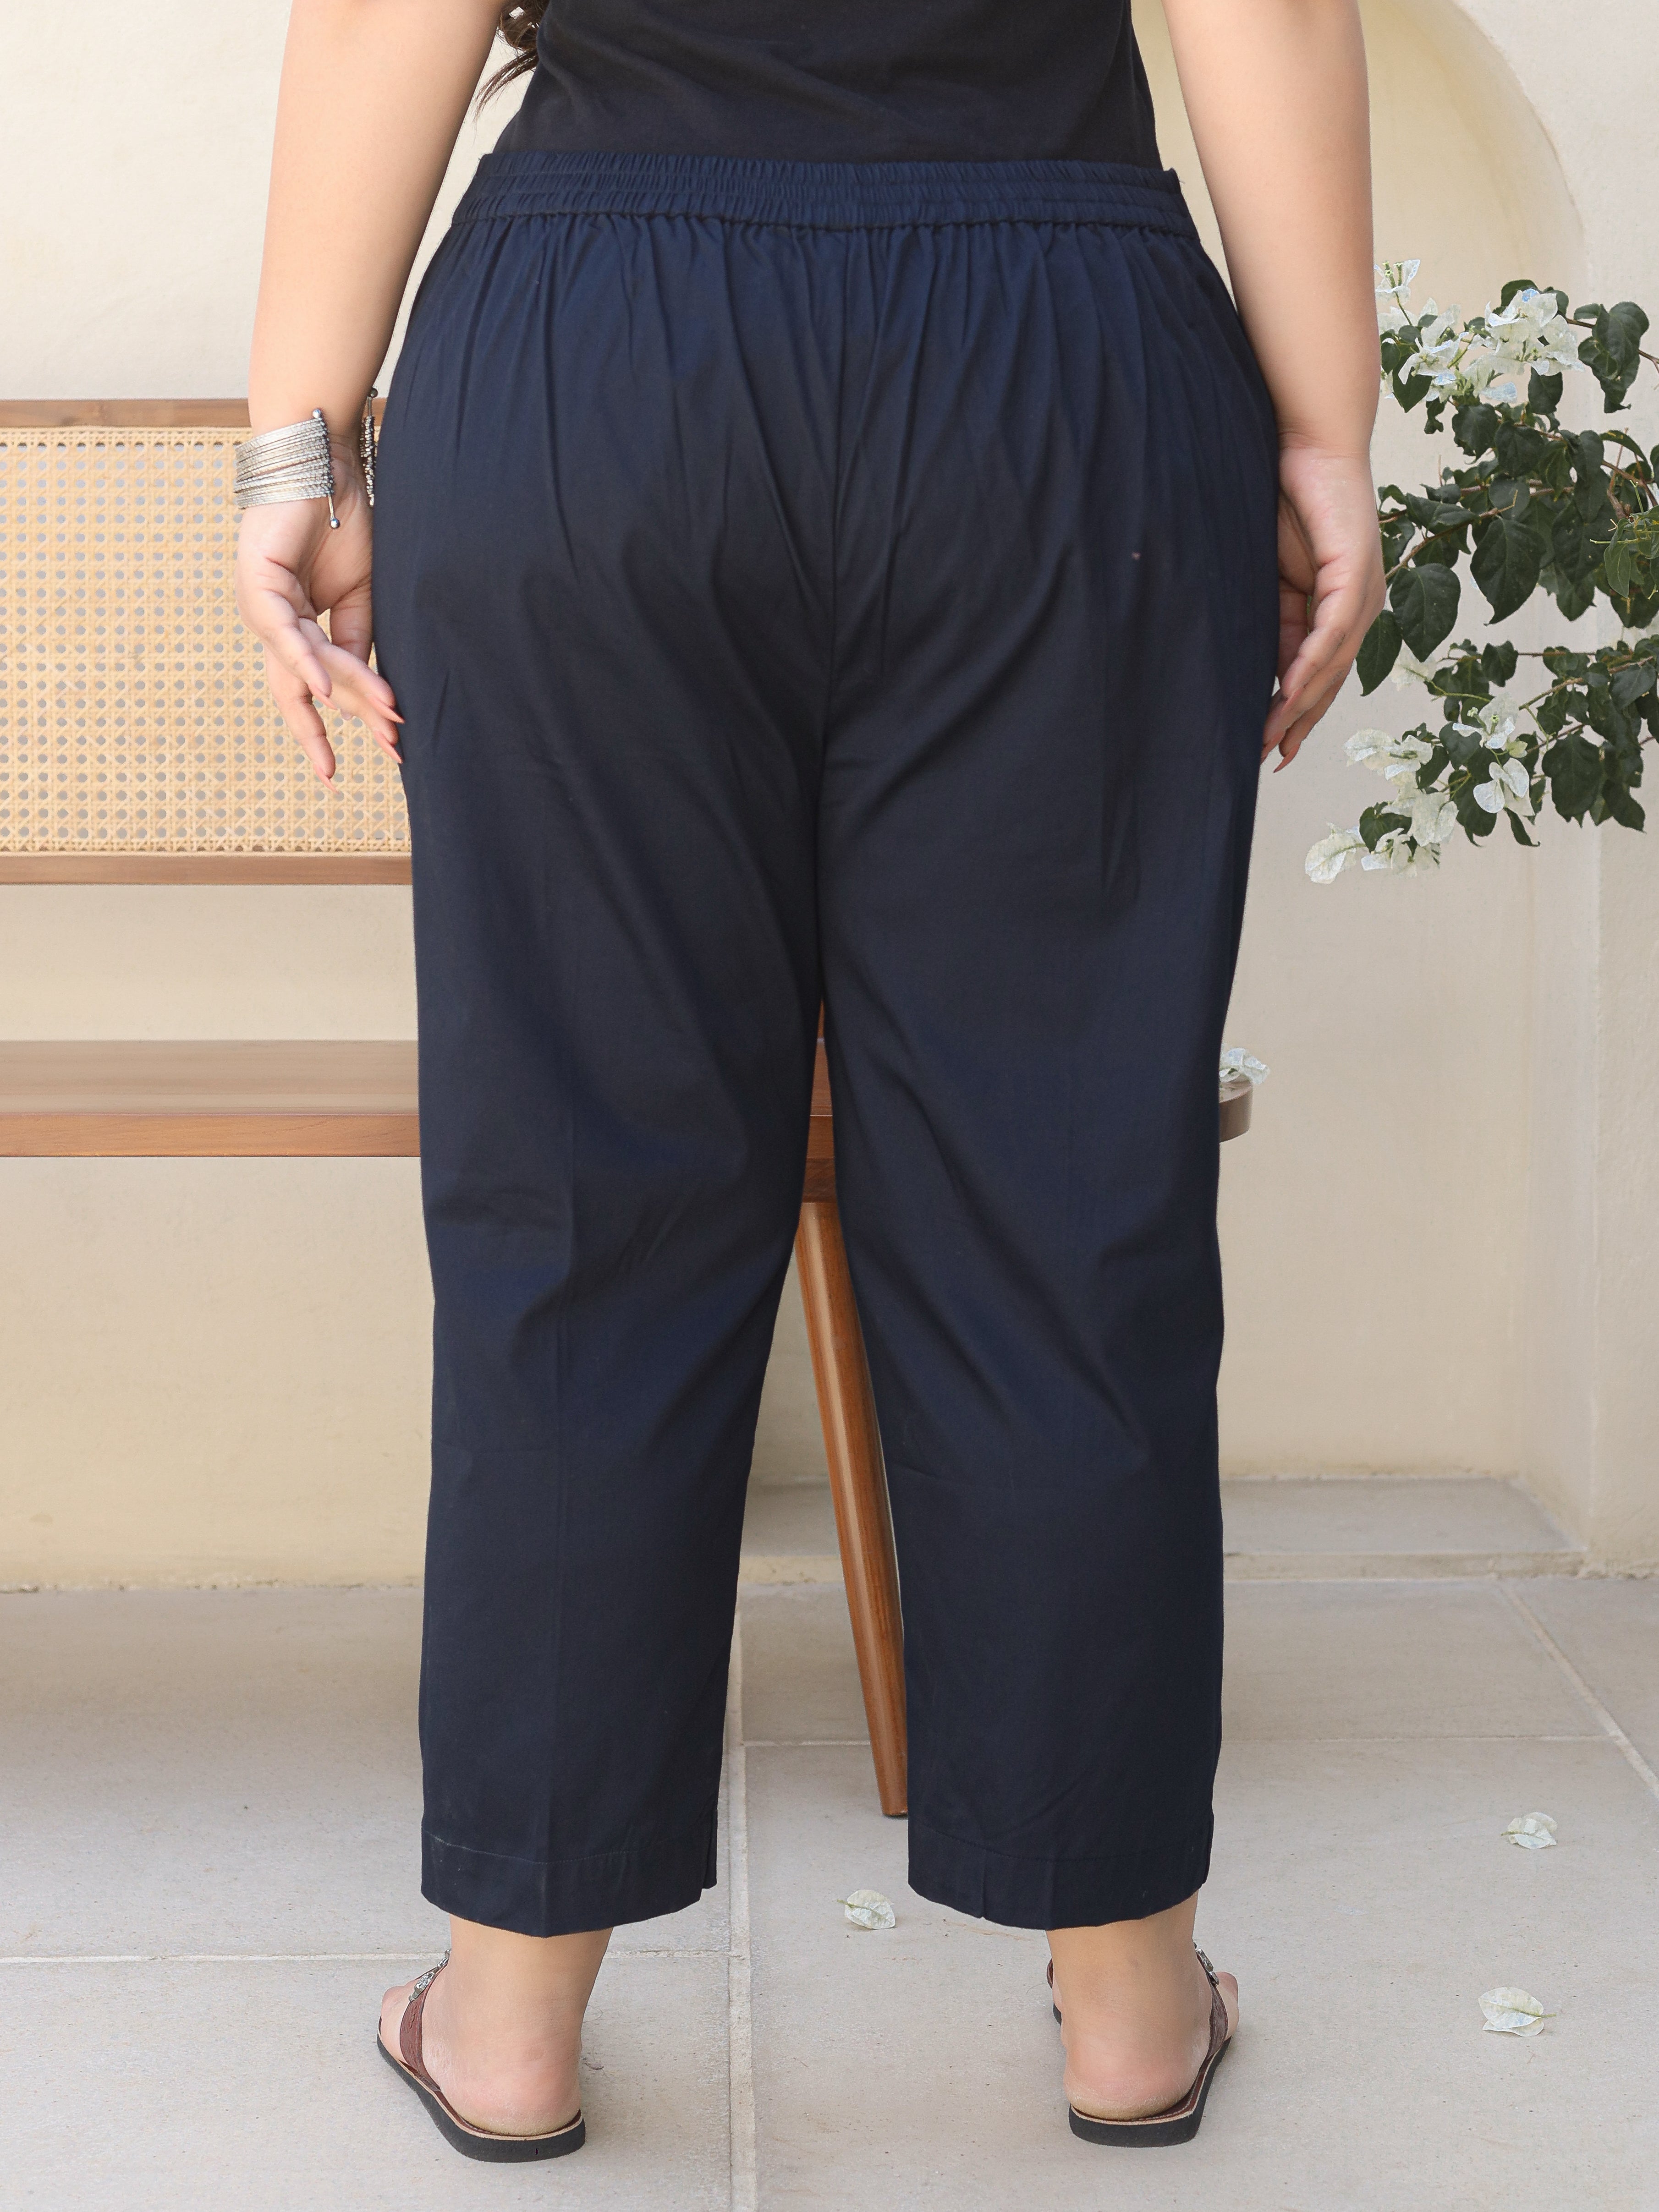 Juniper Blue Solid Lycra Women Drawstring Plus Size Pants With Single Side Pocket